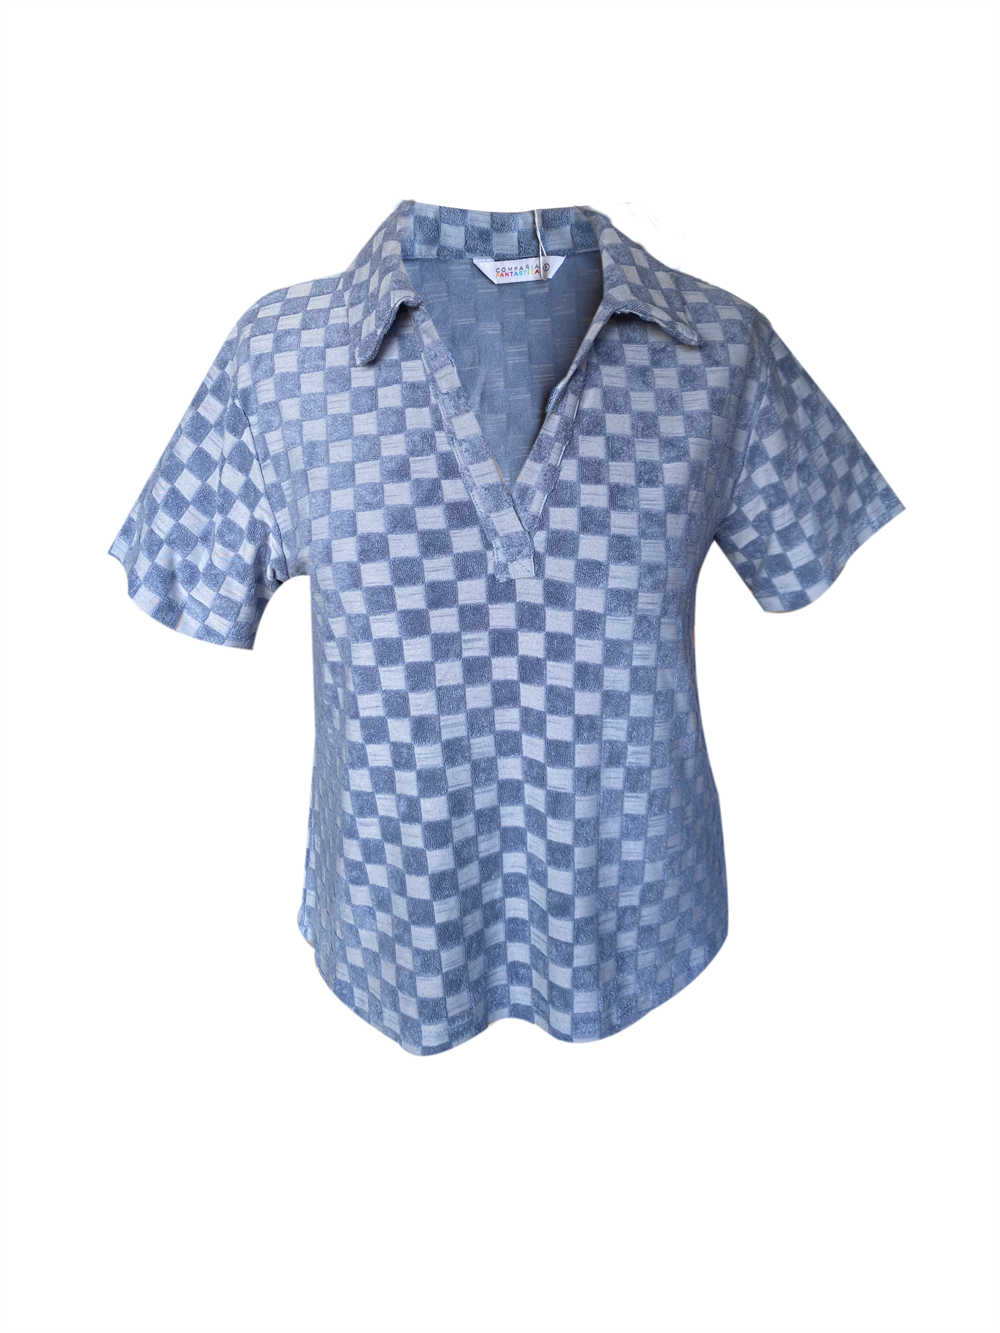 COMPANIA FANTASTICA Checkered Polo shirt Blue S